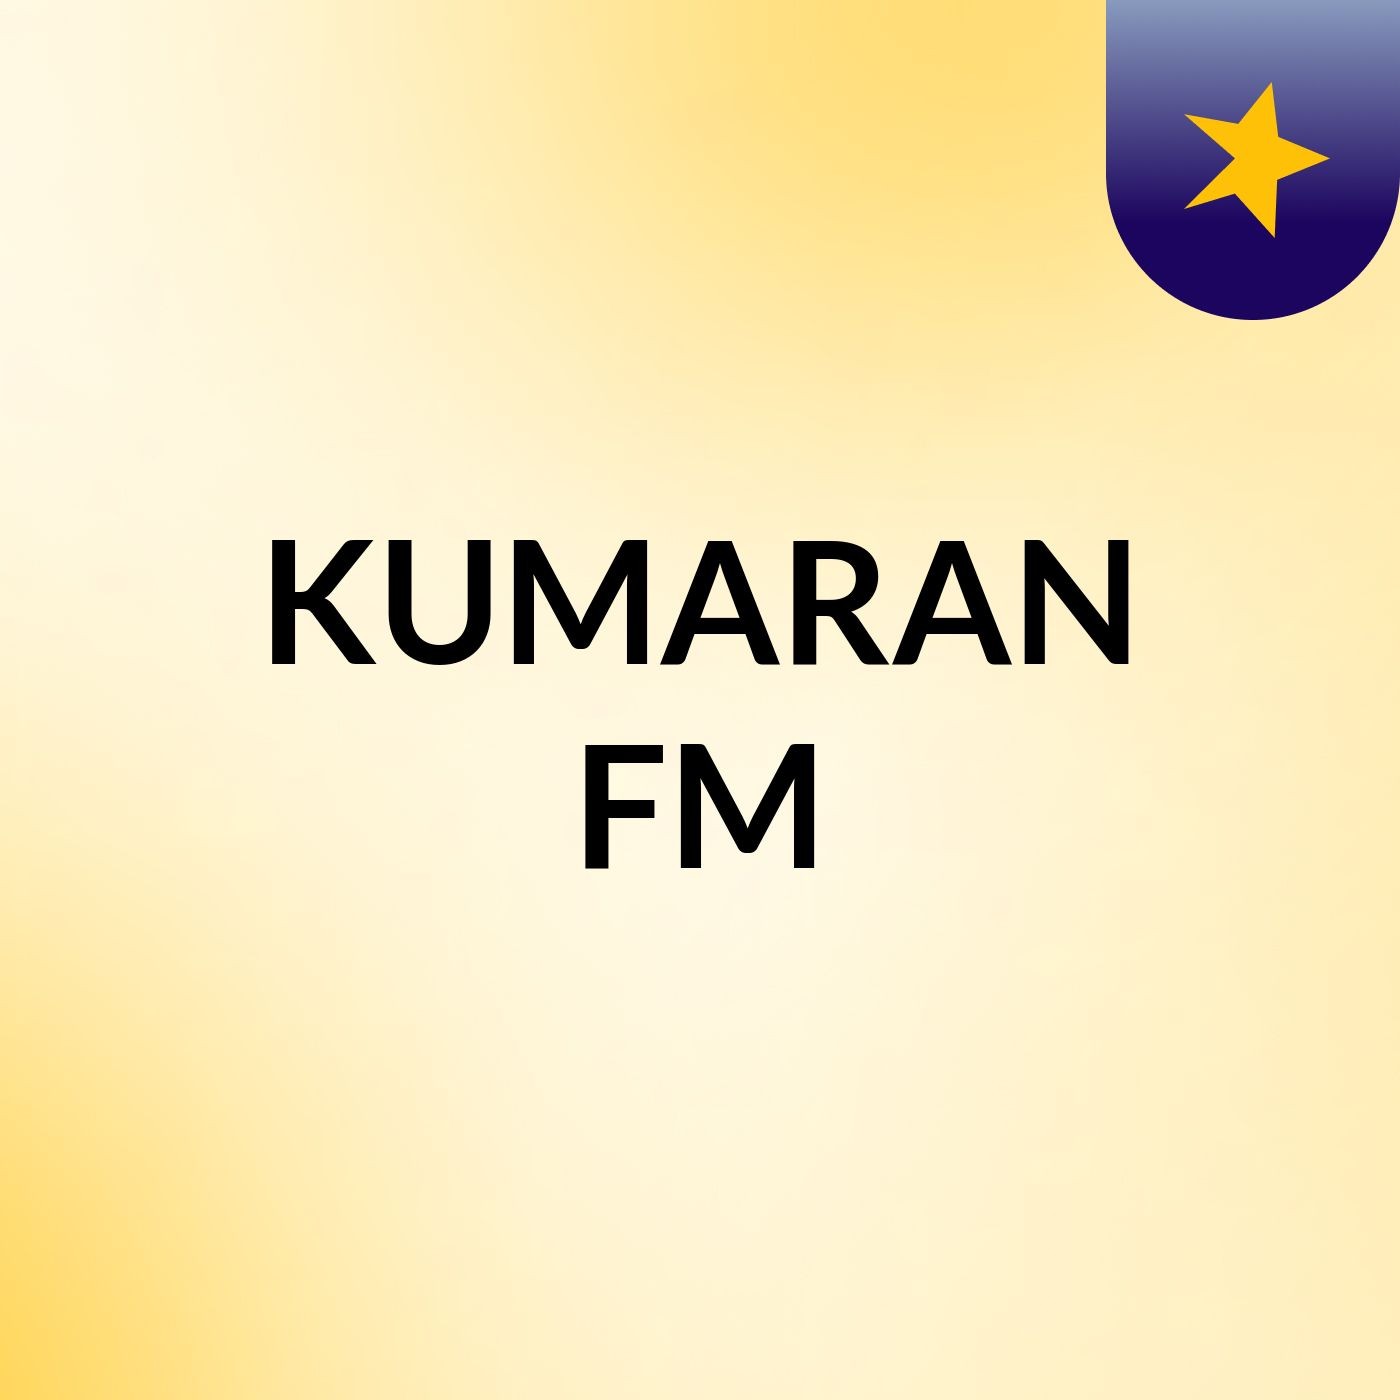 KUMARAN FM